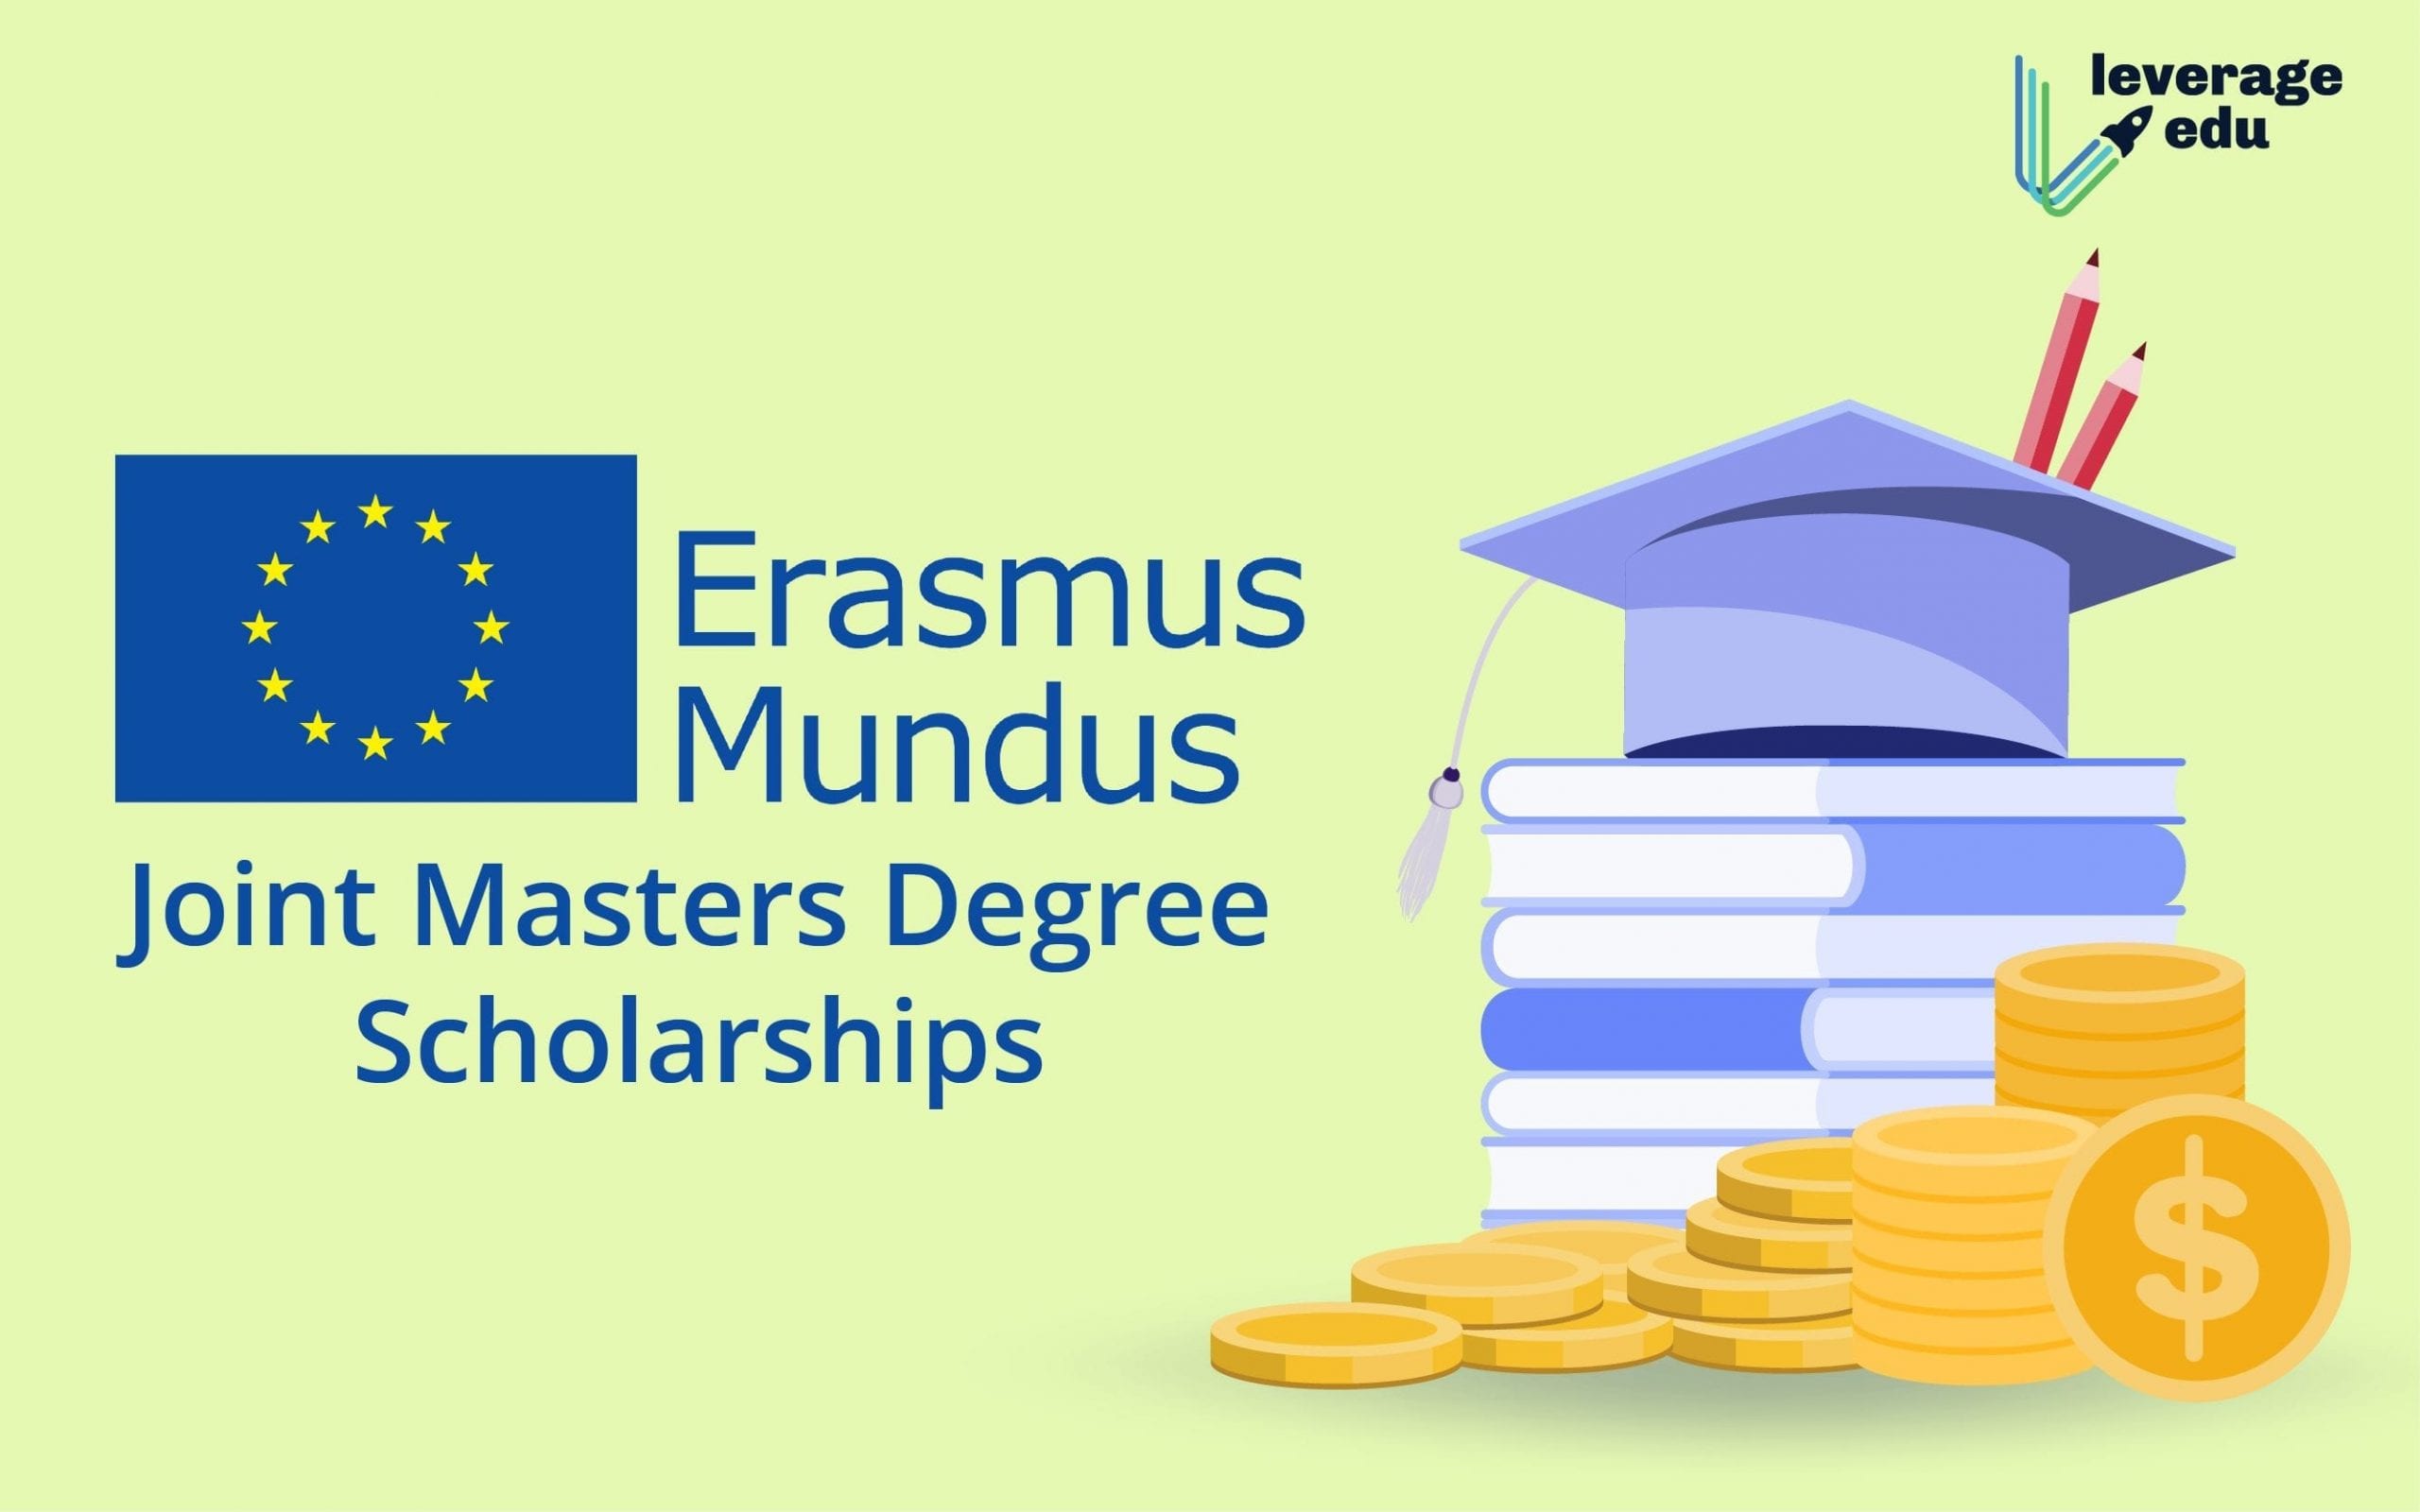 Erasmus Mundus Joint Masters Degree Scholarship 2021 Leverage Edu